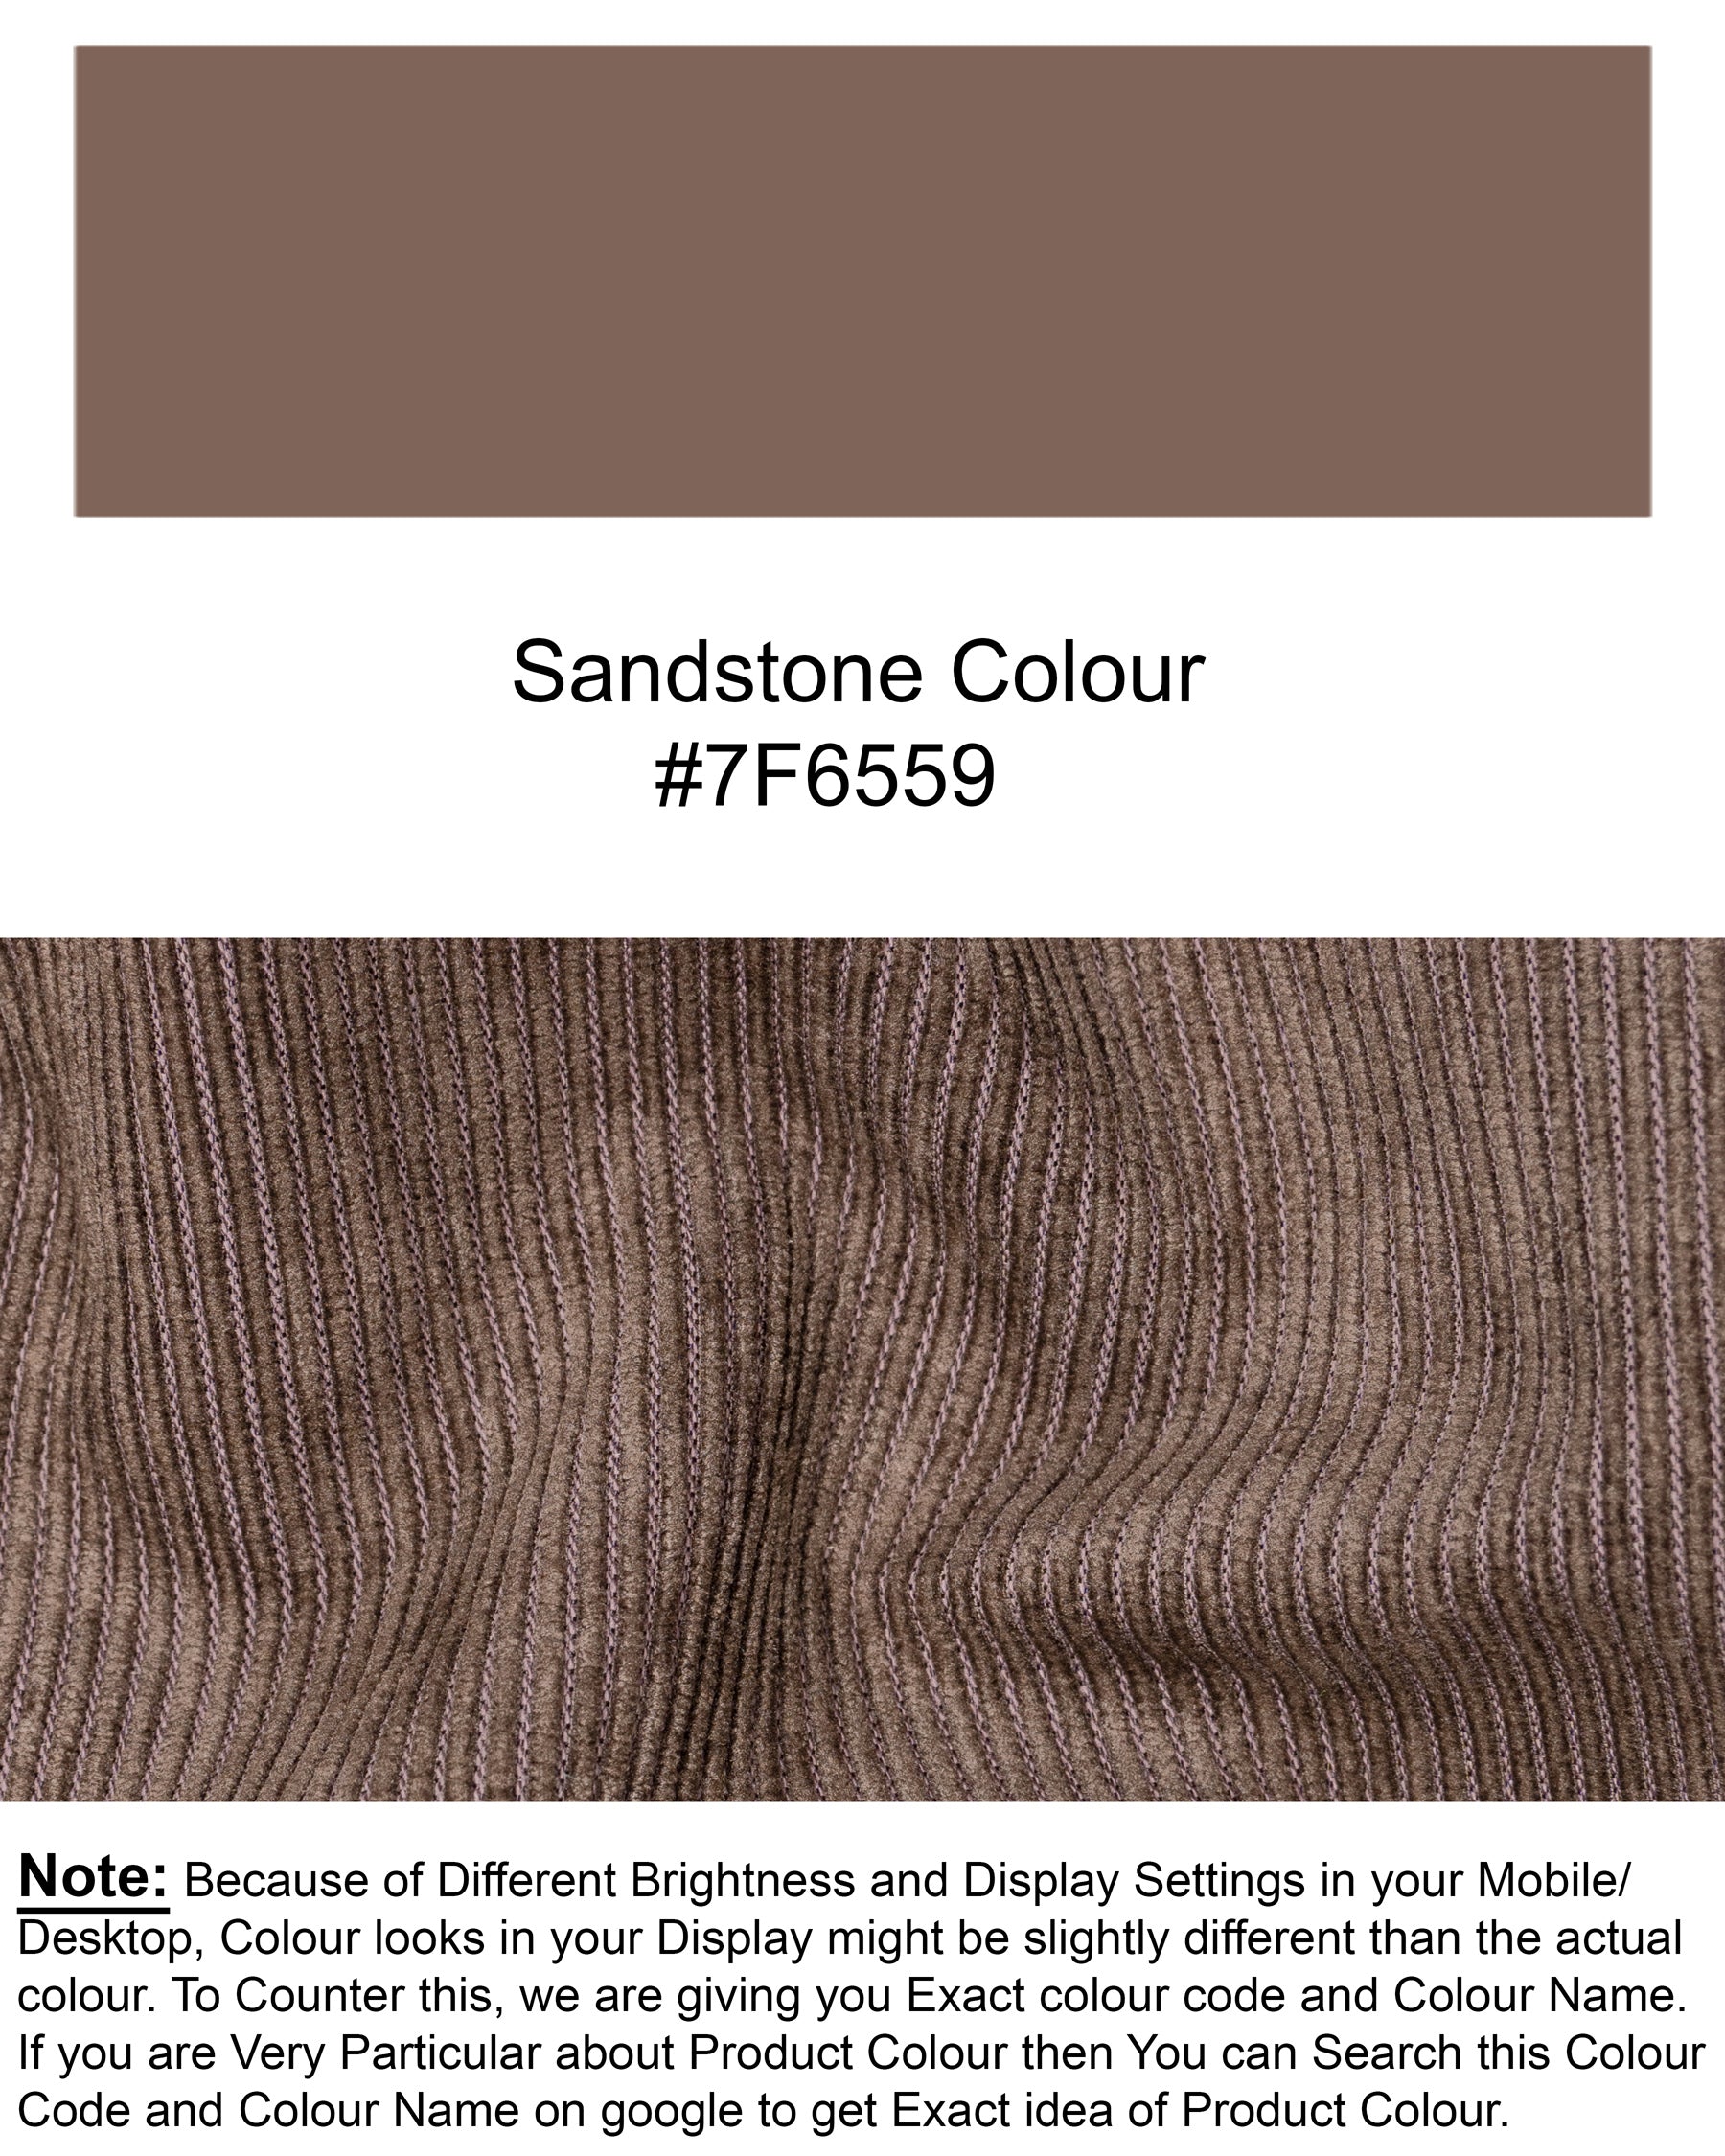 Sandstone Brown Striped Corduroy Premium Cotton Blazer BL1389-SB-36, BL1389-SB-38, BL1389-SB-40, BL1389-SB-42, BL1389-SB-44, BL1389-SB-46, BL1389-SB-48, BL1389-SB-50, BL1389-SB-52, BL1389-SB-54, BL1389-SB-56, BL1389-SB-58, BL1389-SB-60